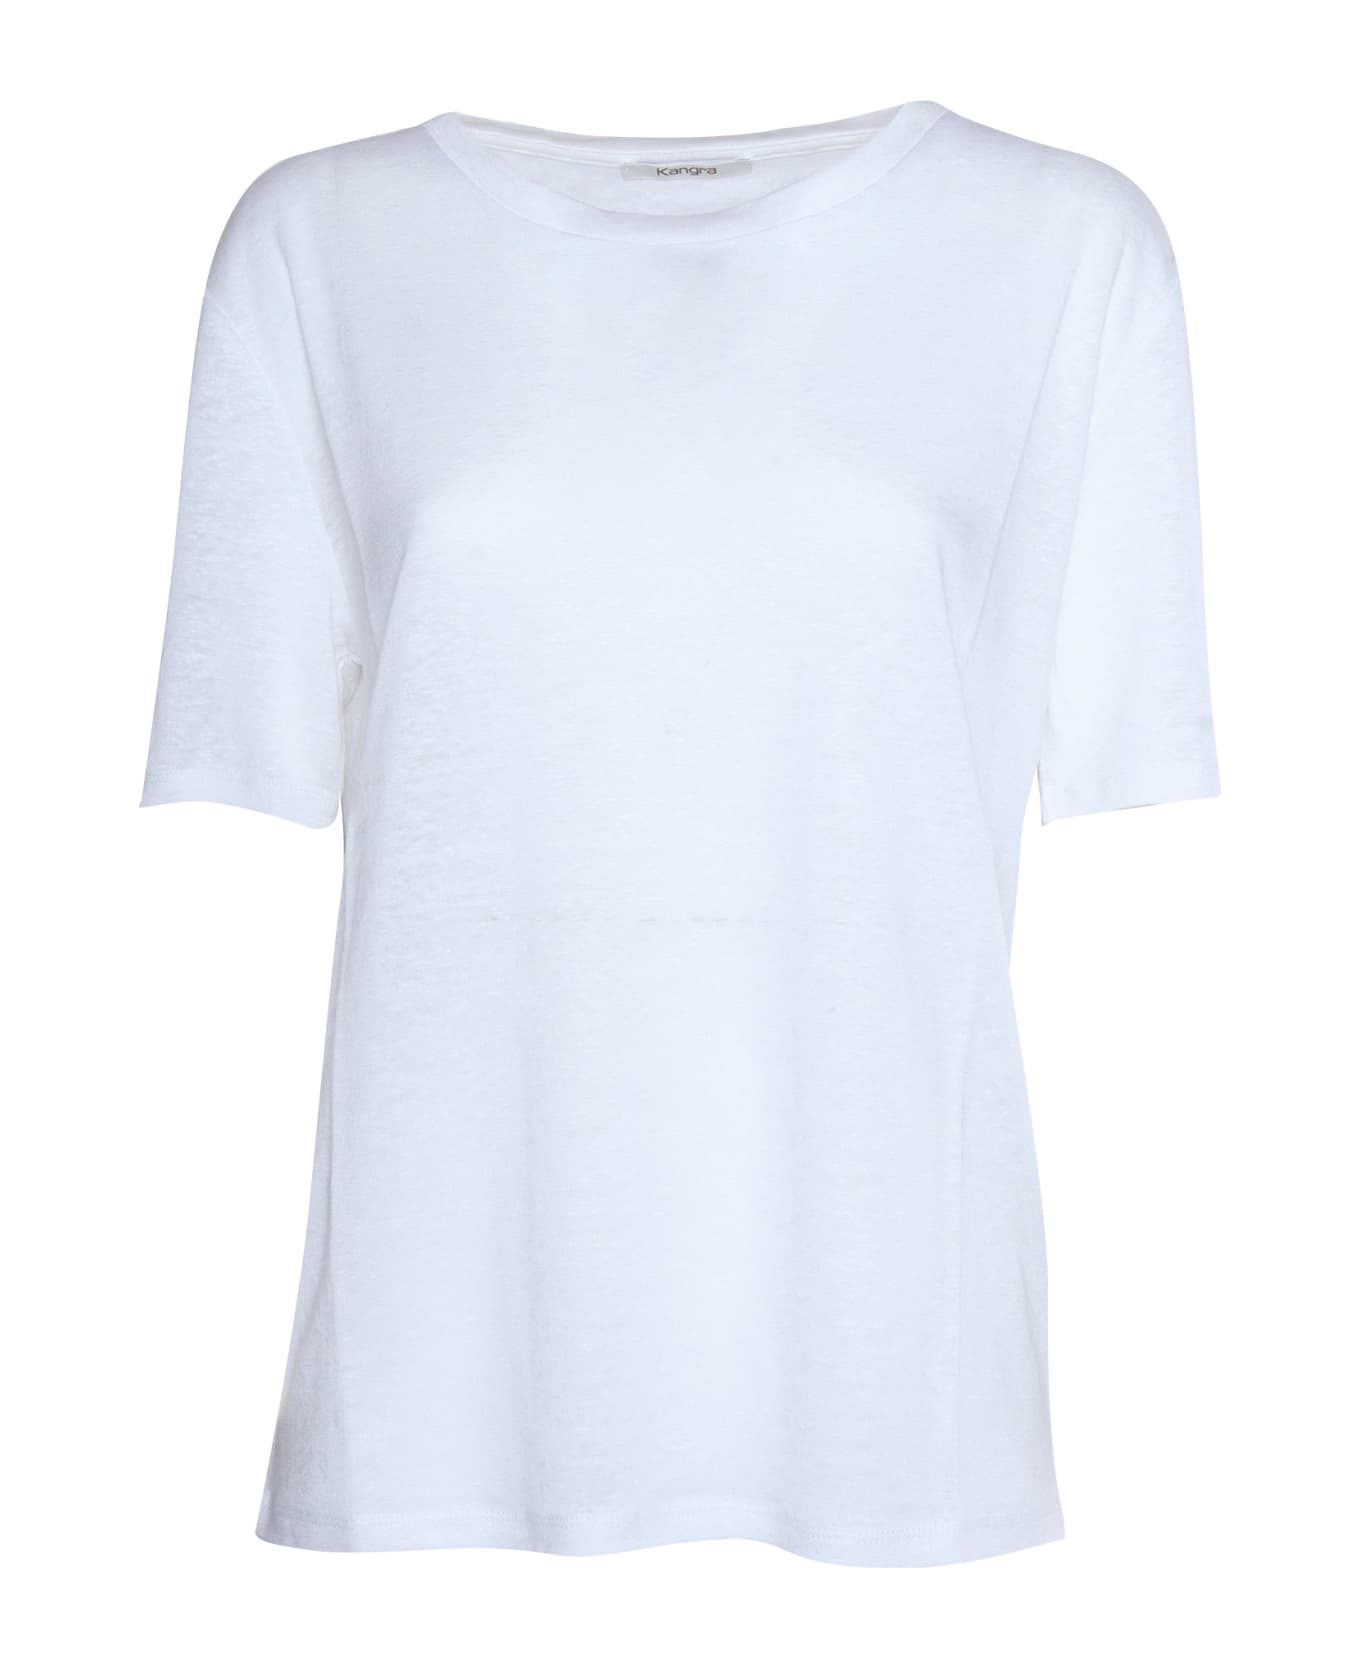 Kangra White T-shirt - WHITE